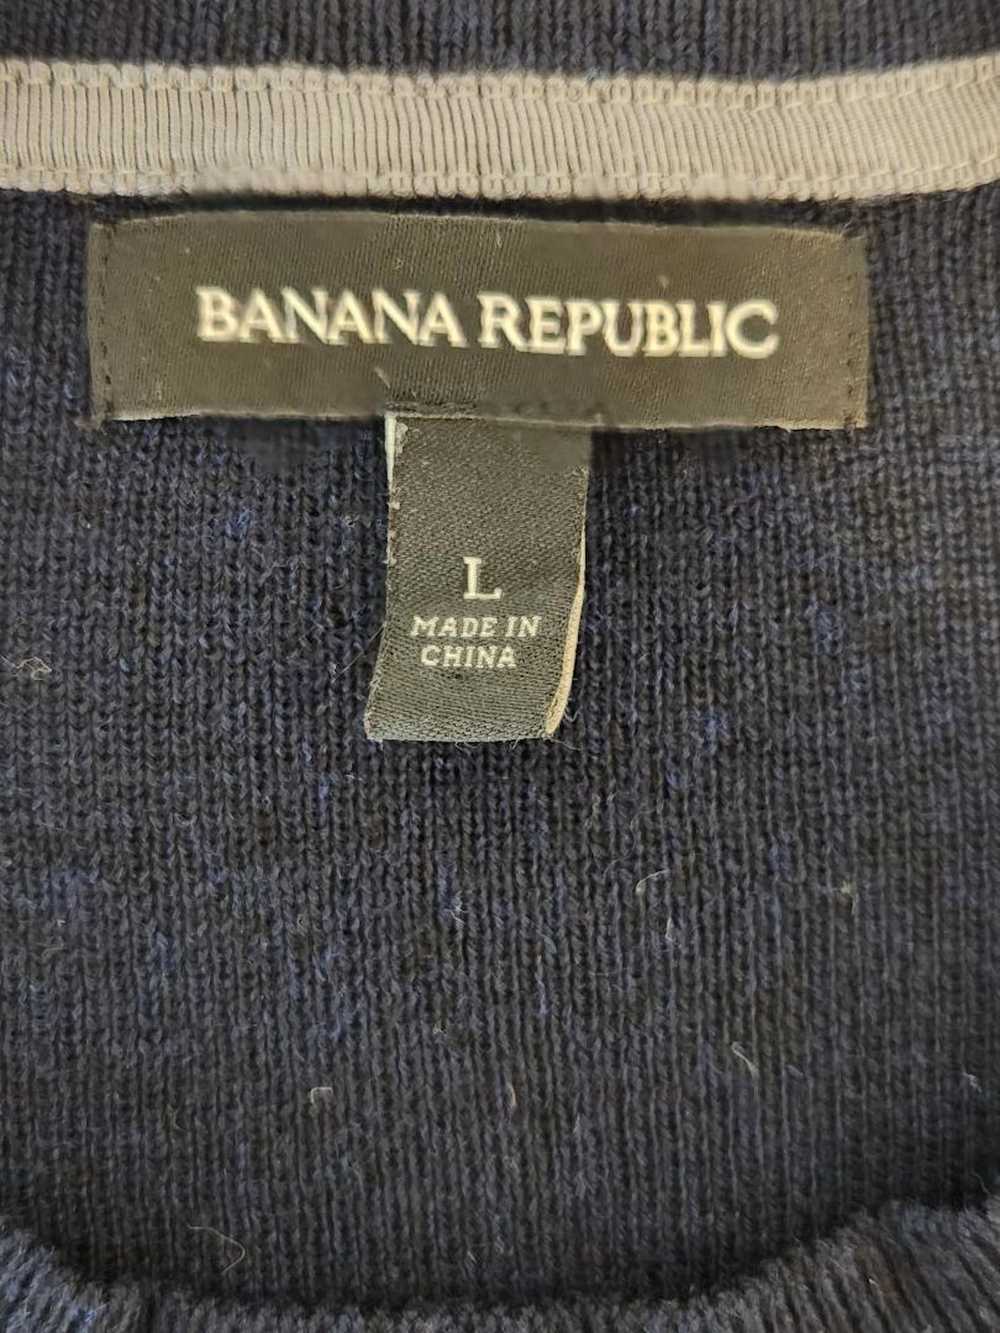 Banana Republic Banana Republic Sweater - image 3